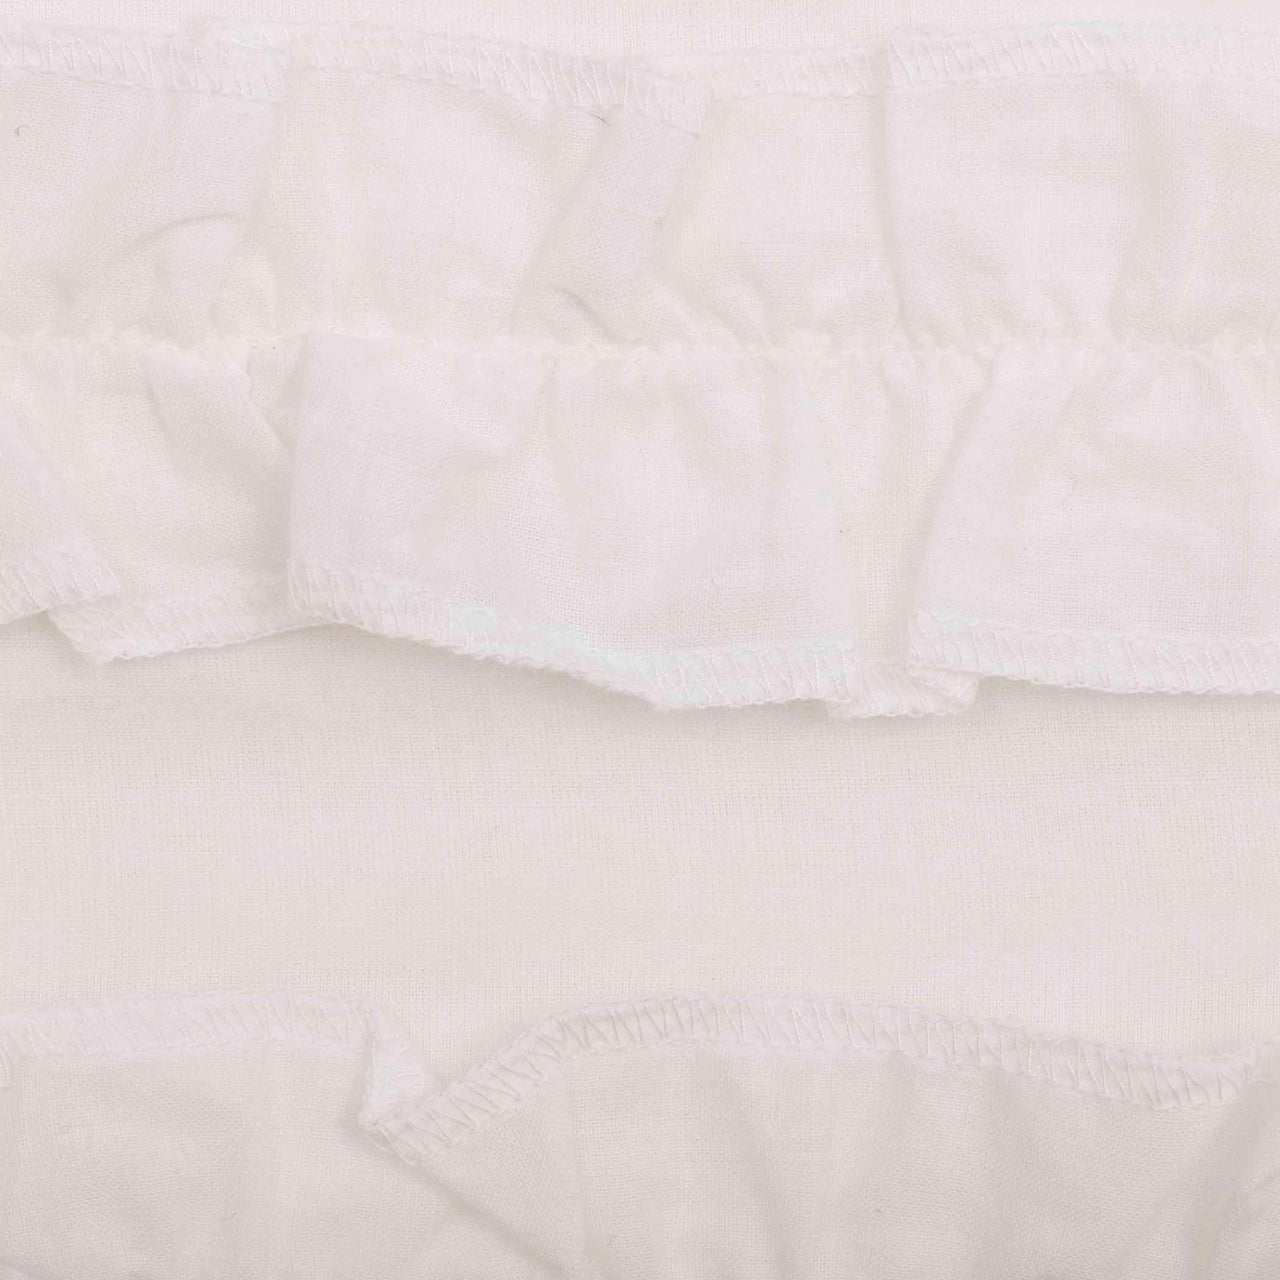 White Ruffled Sheer Petticoat Prairie Short Panel Curtain Set 63x36x18 VHC Brands - The Fox Decor